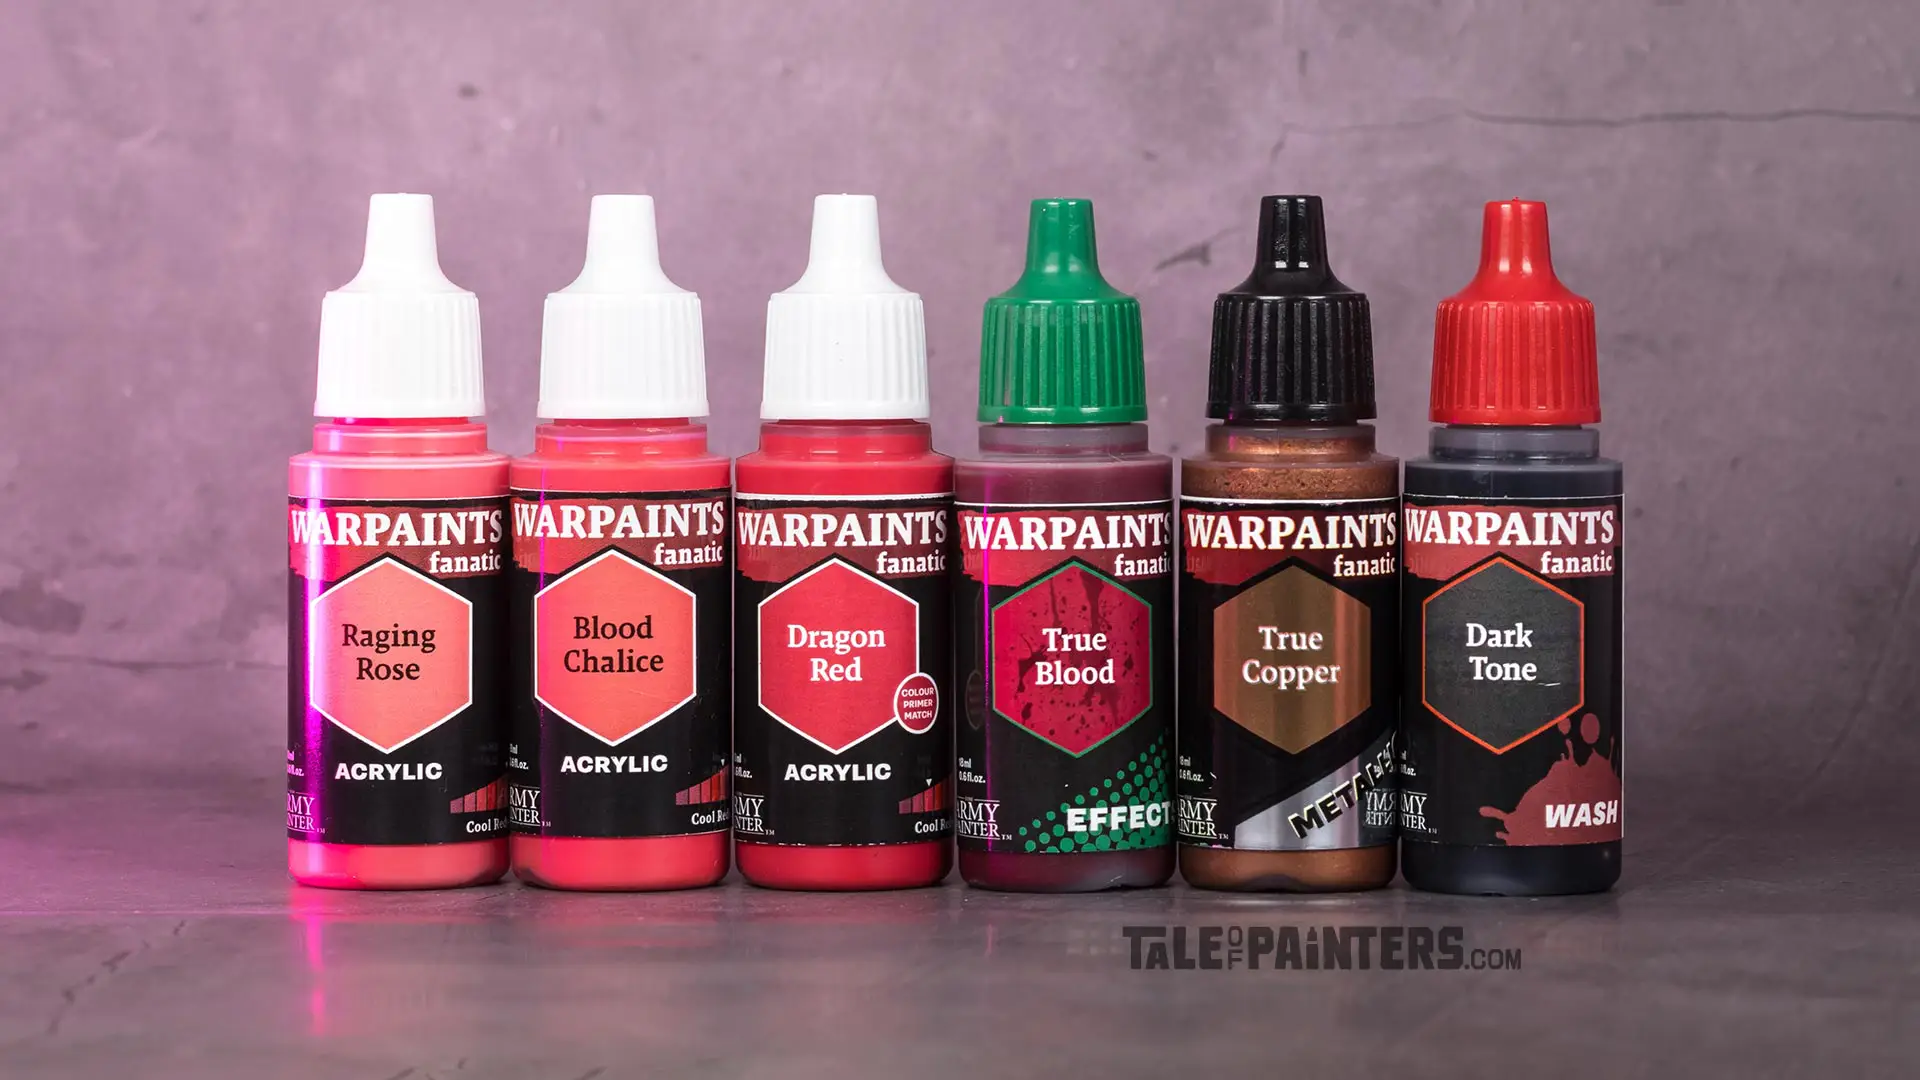  The Army Painter Acrylic Spray Bundle For Miniature